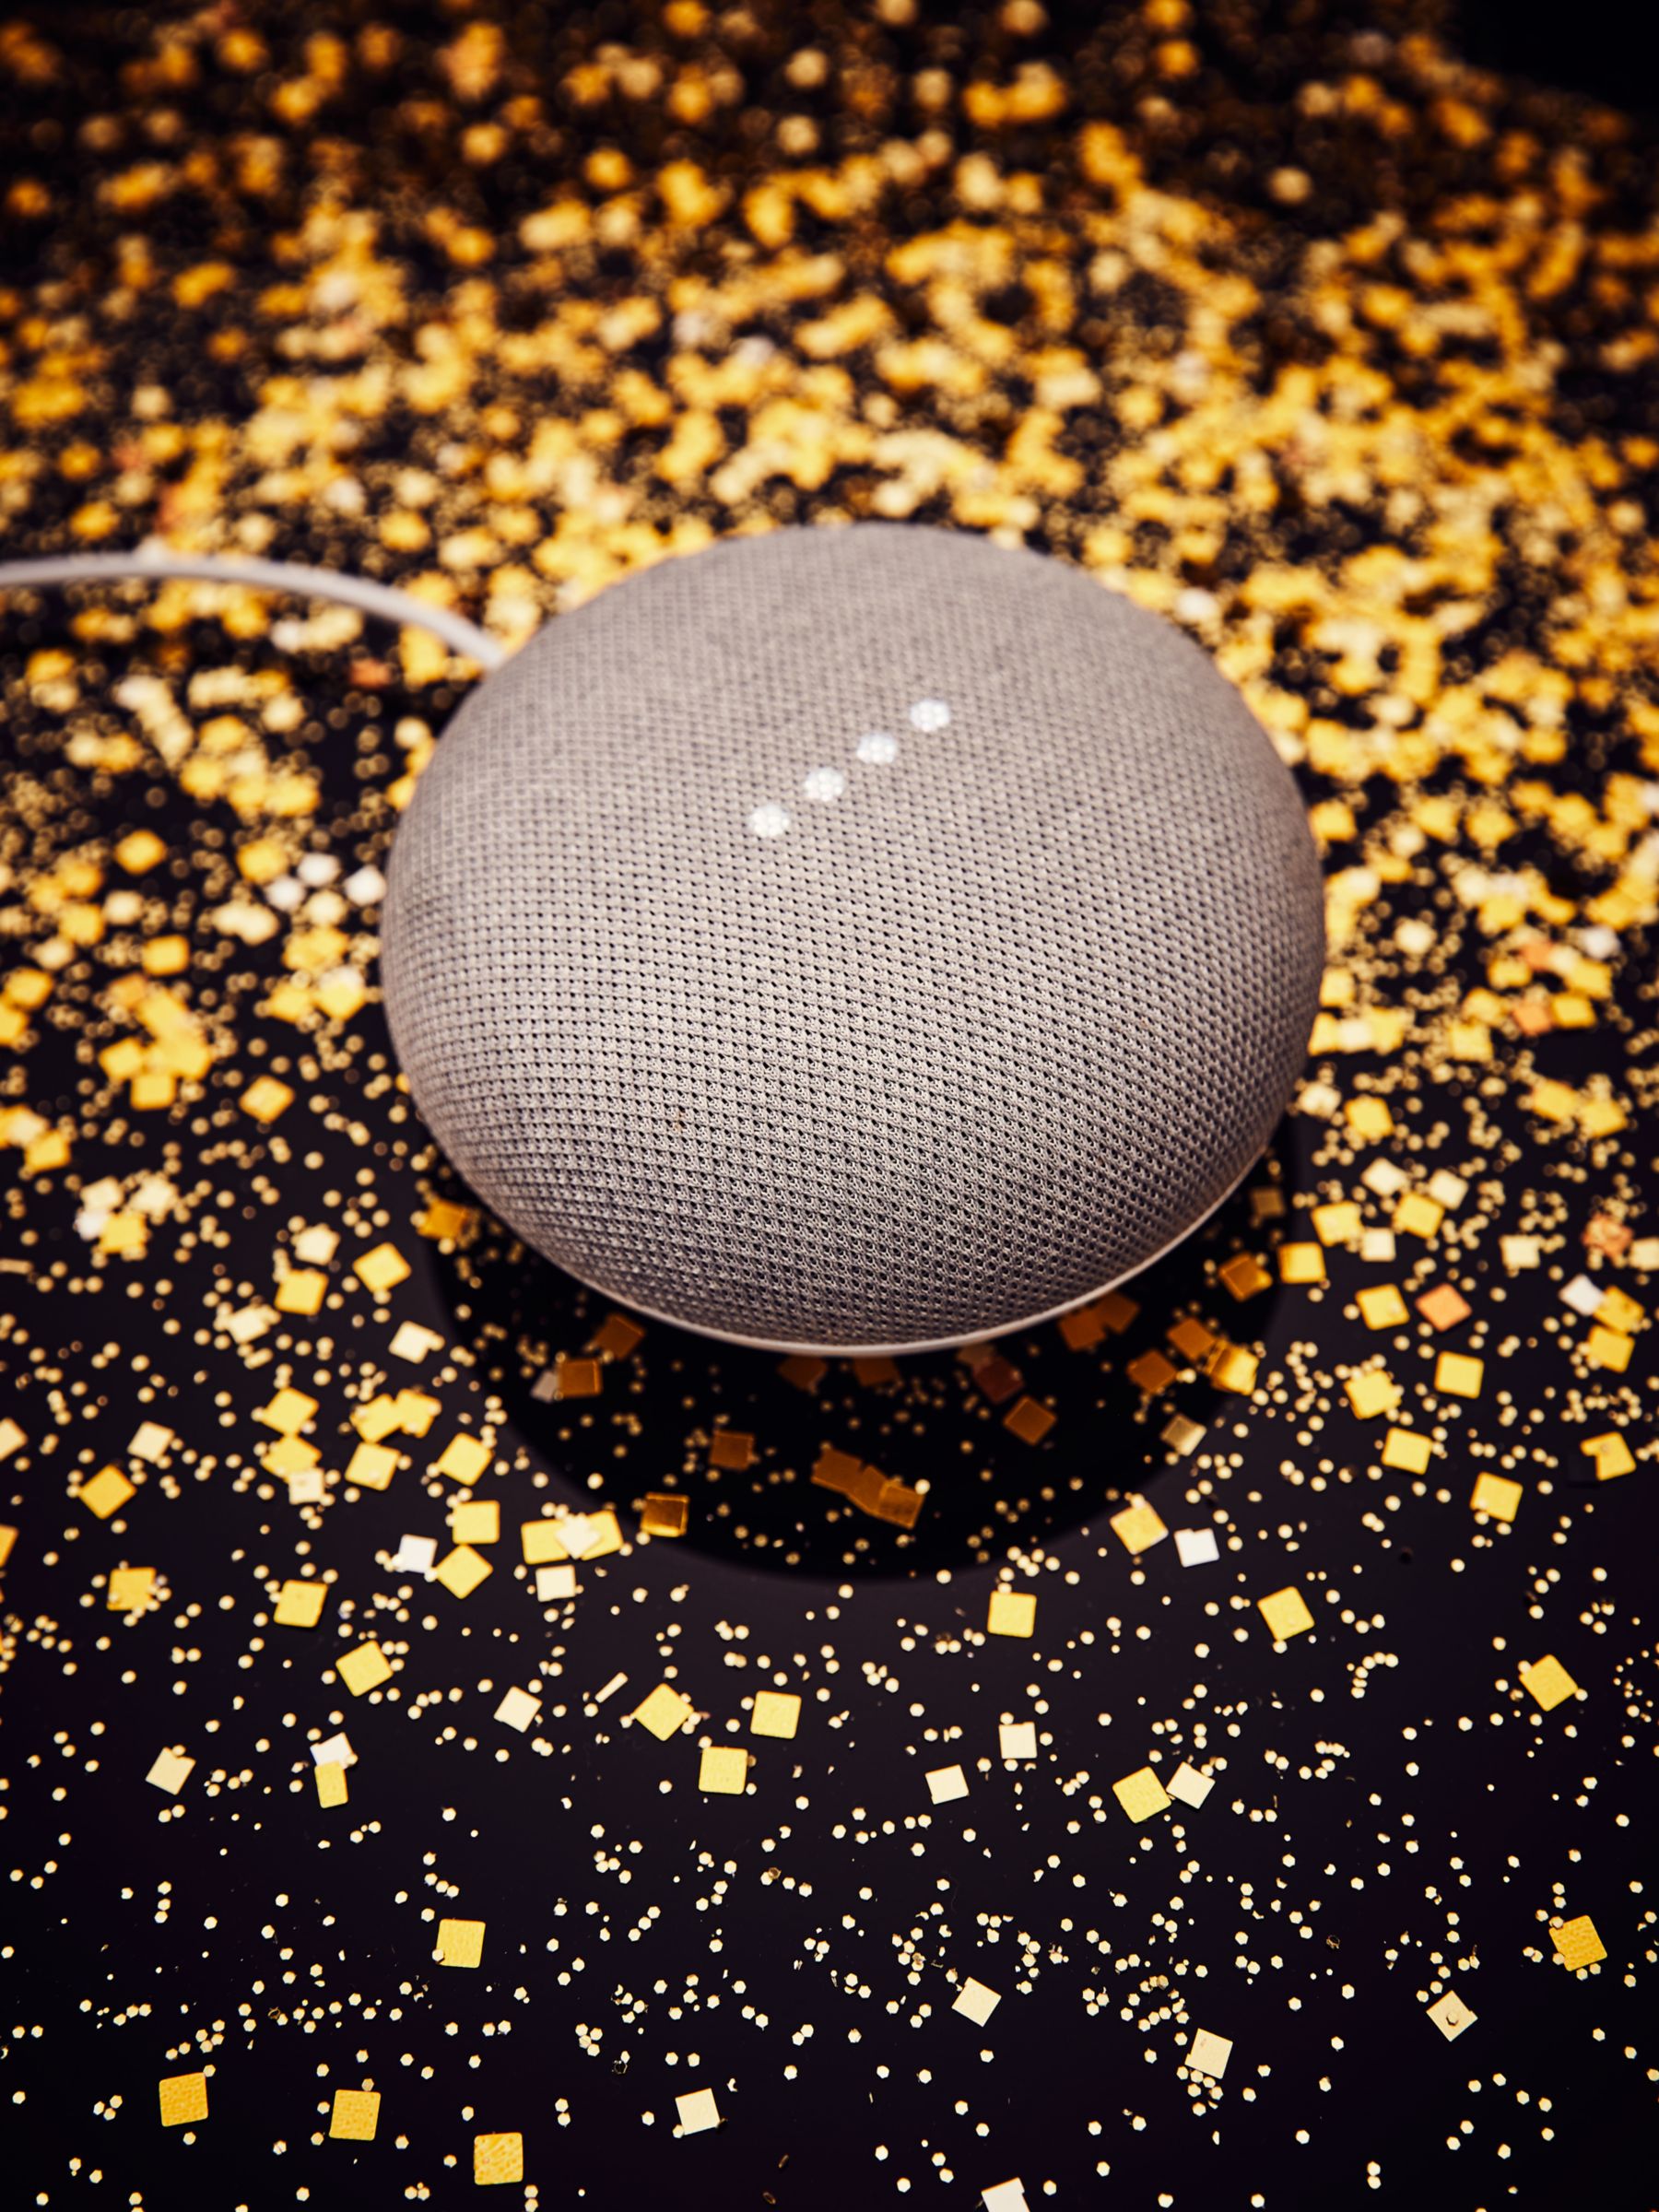 Google Nest Mini 2nd Generation Smart Speaker with Google Assistant -  Charcoal